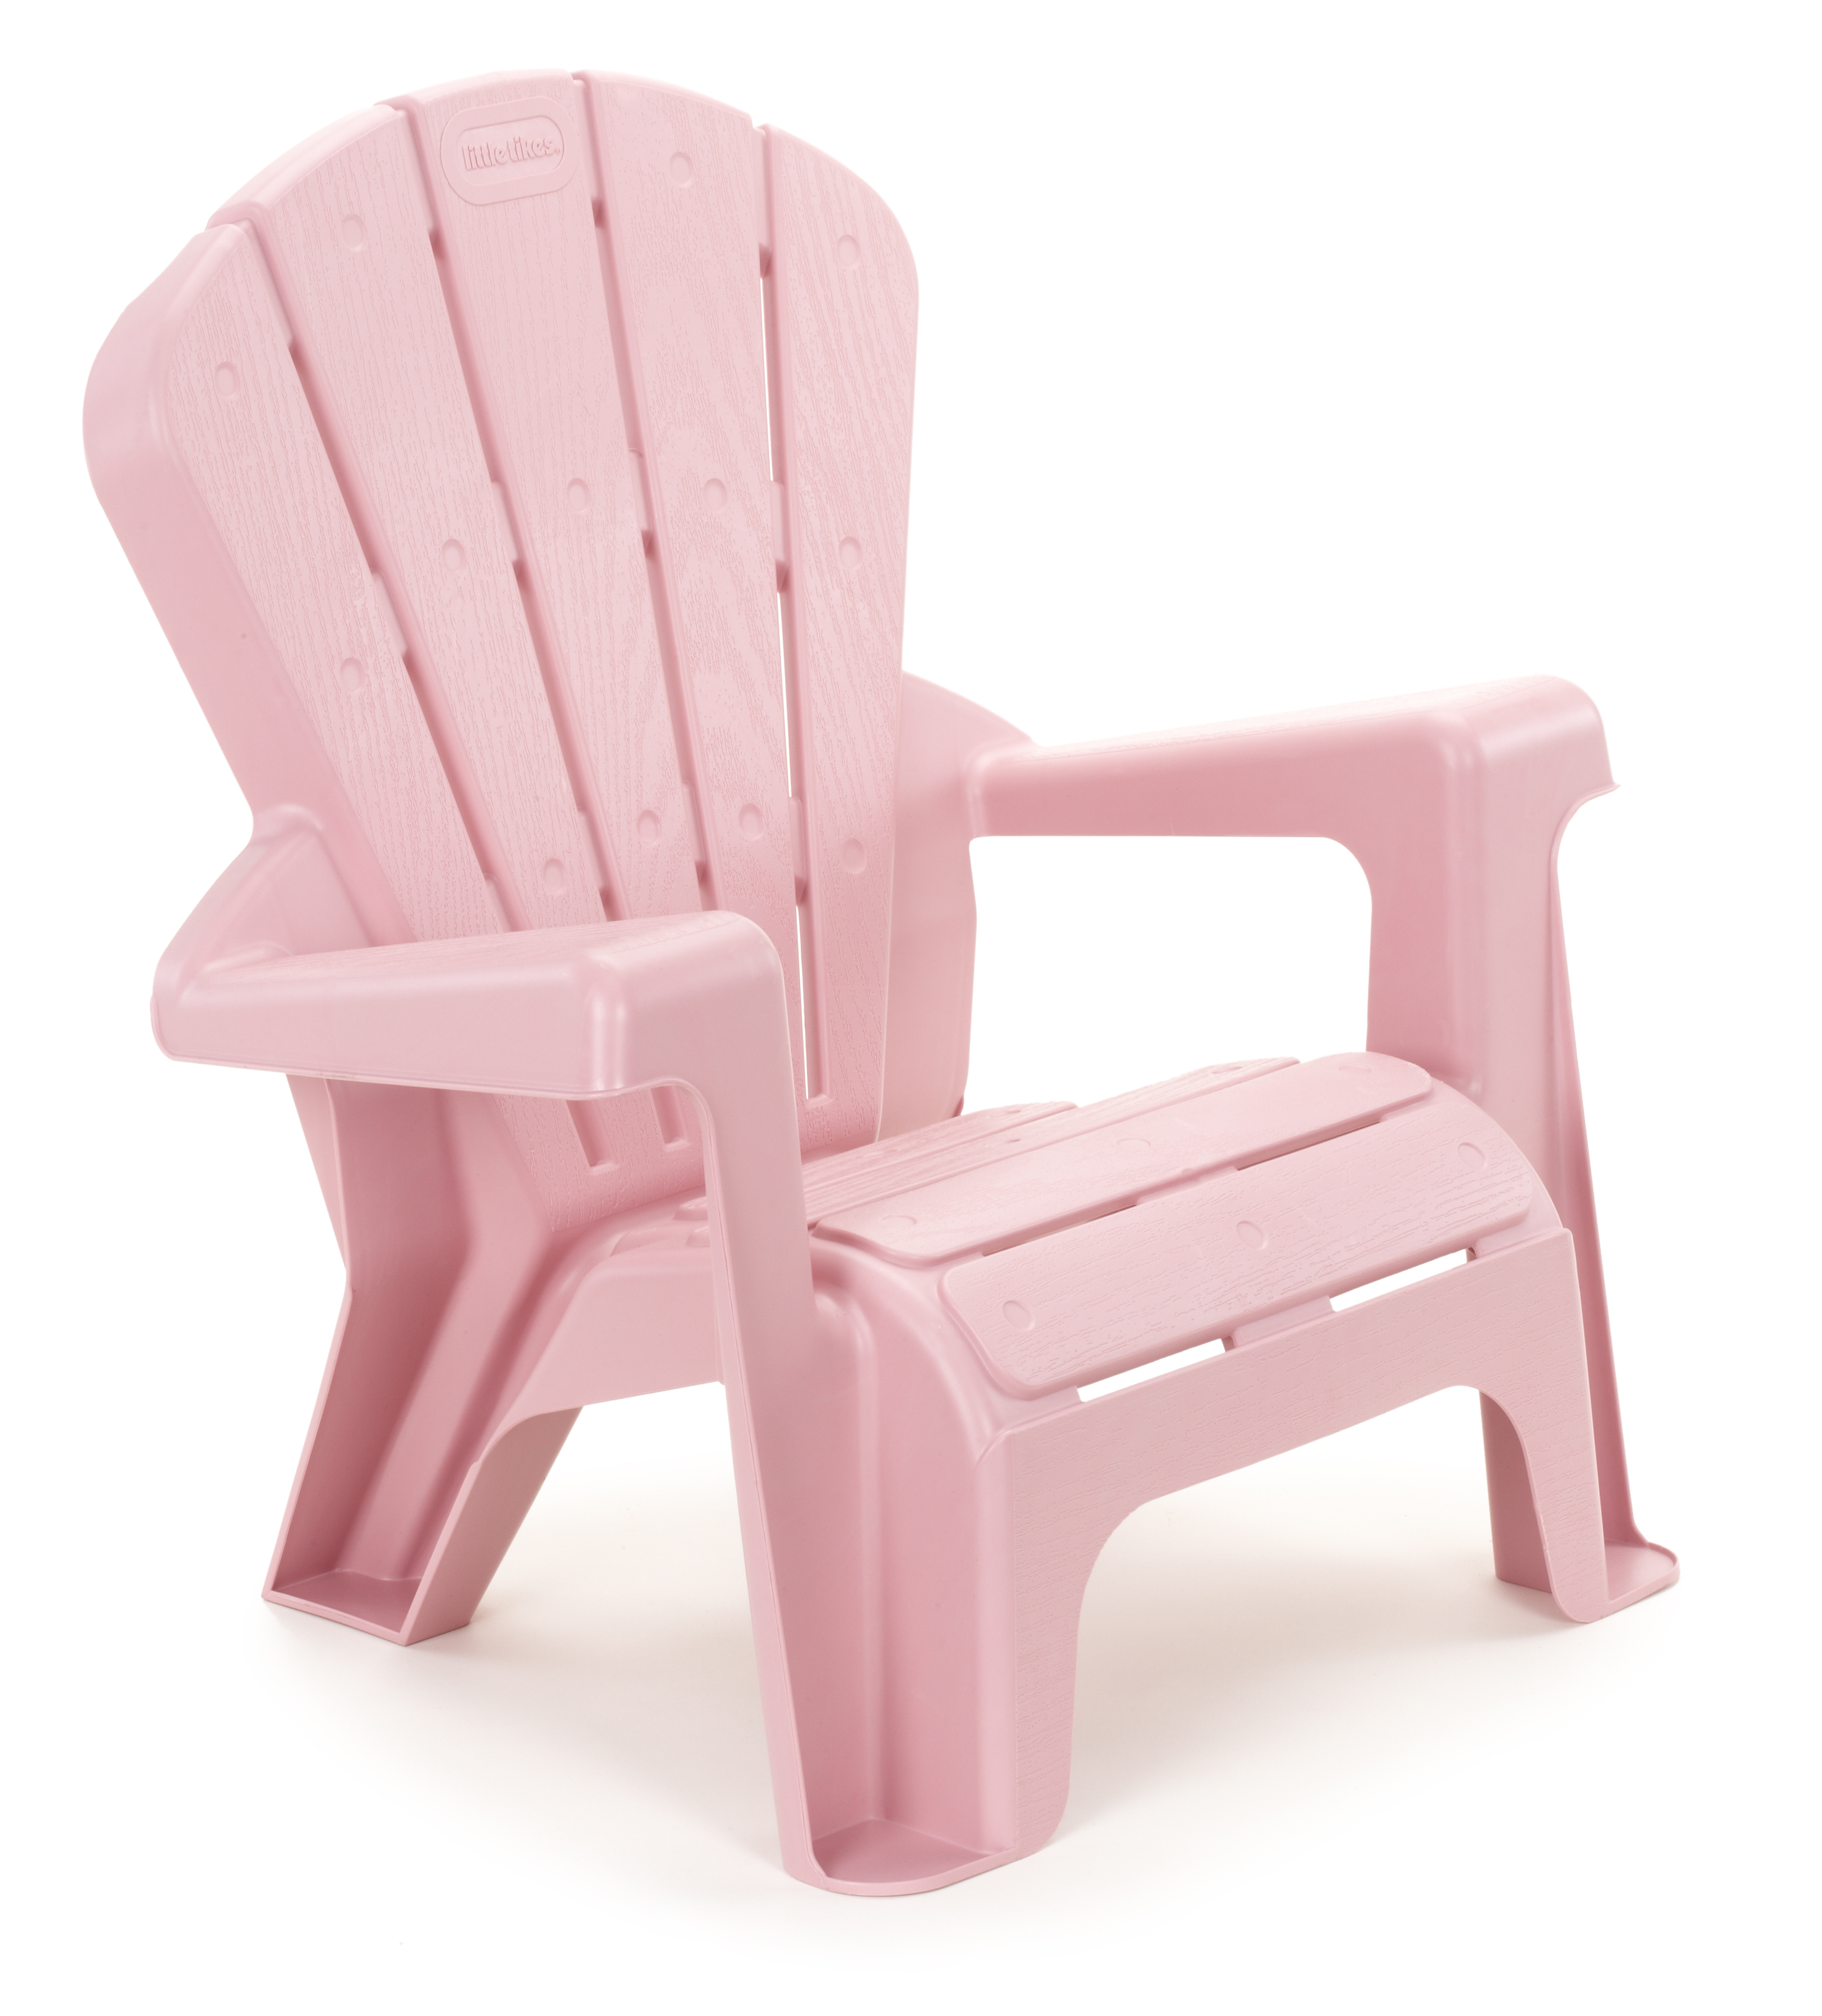 Little Tikes Garden Chair Pink